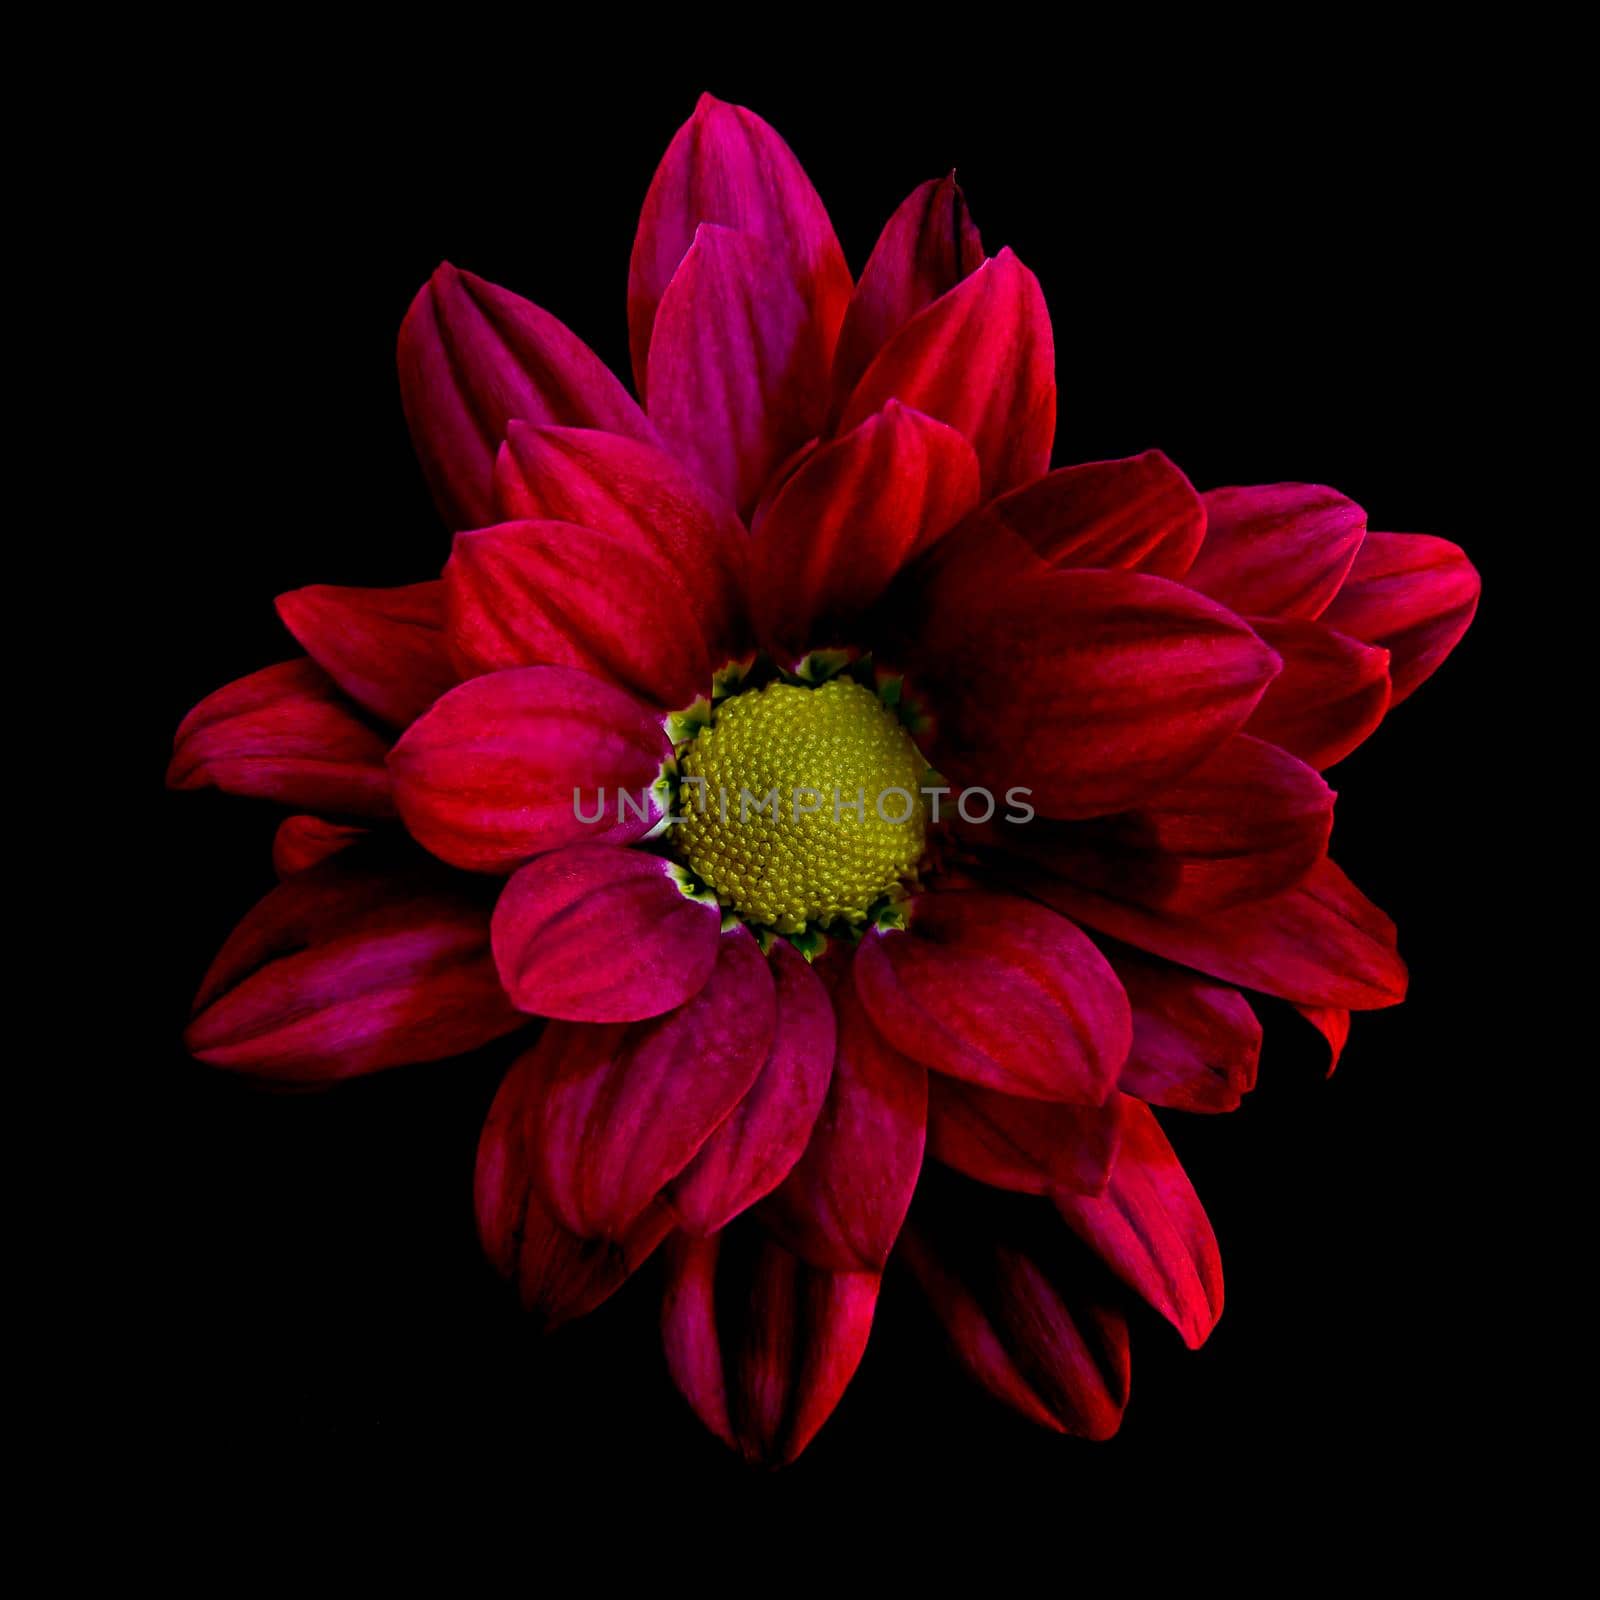 Chrysanthemum by catoroed